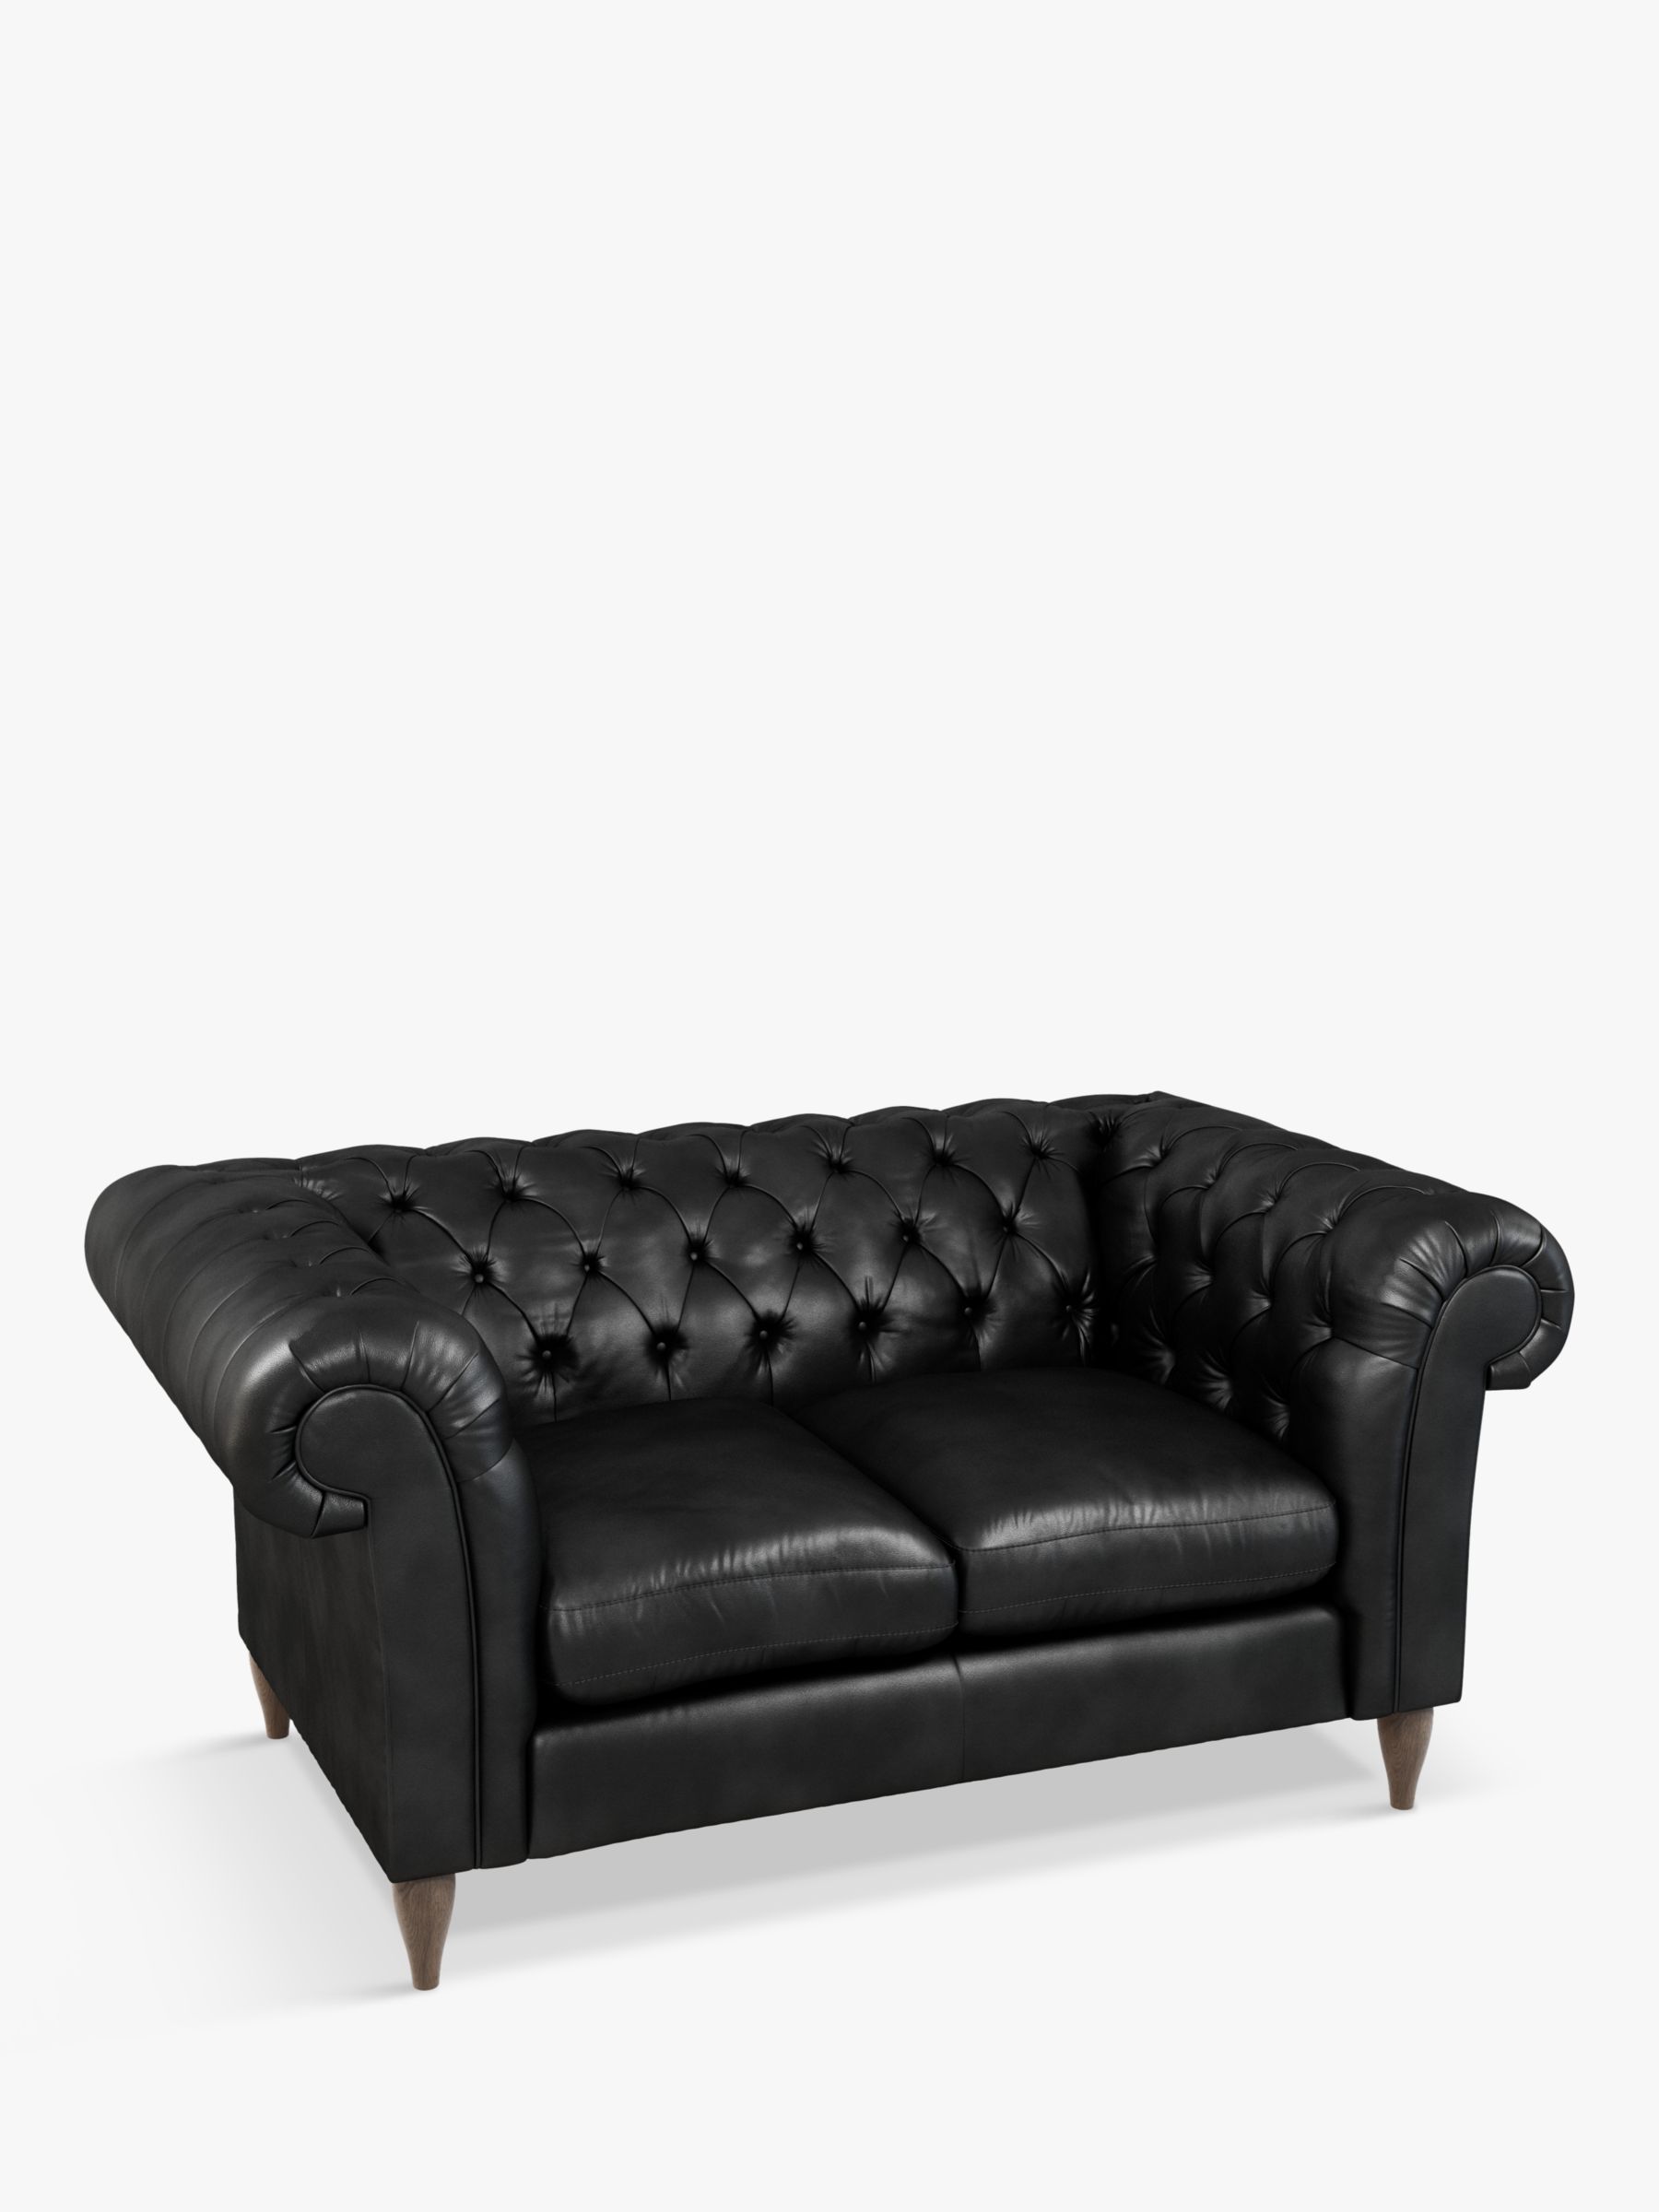 Cromwell Range, John Lewis Cromwell Chesterfield Small 2 Seater Leather Sofa, Dark Leg, Contempo Black